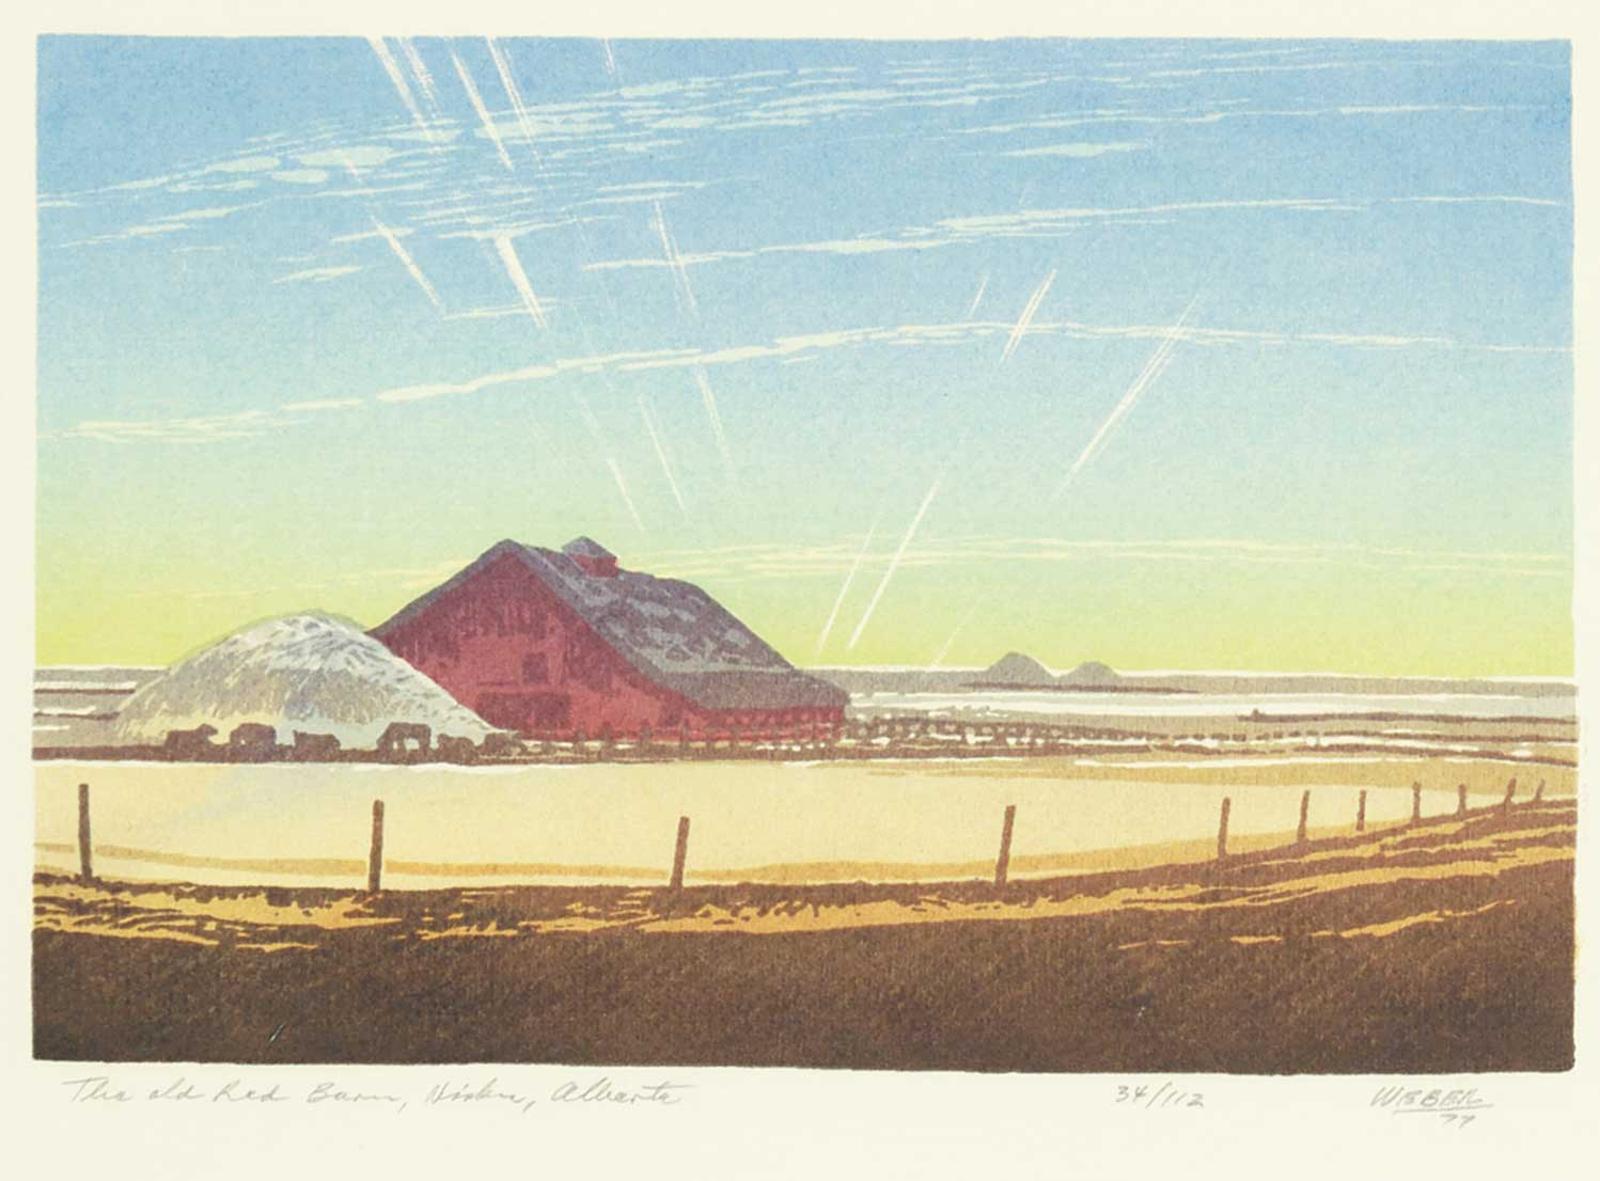 George Weber (1907-2002) - The Old Red Barn, Nisku, Alberta  #34/112